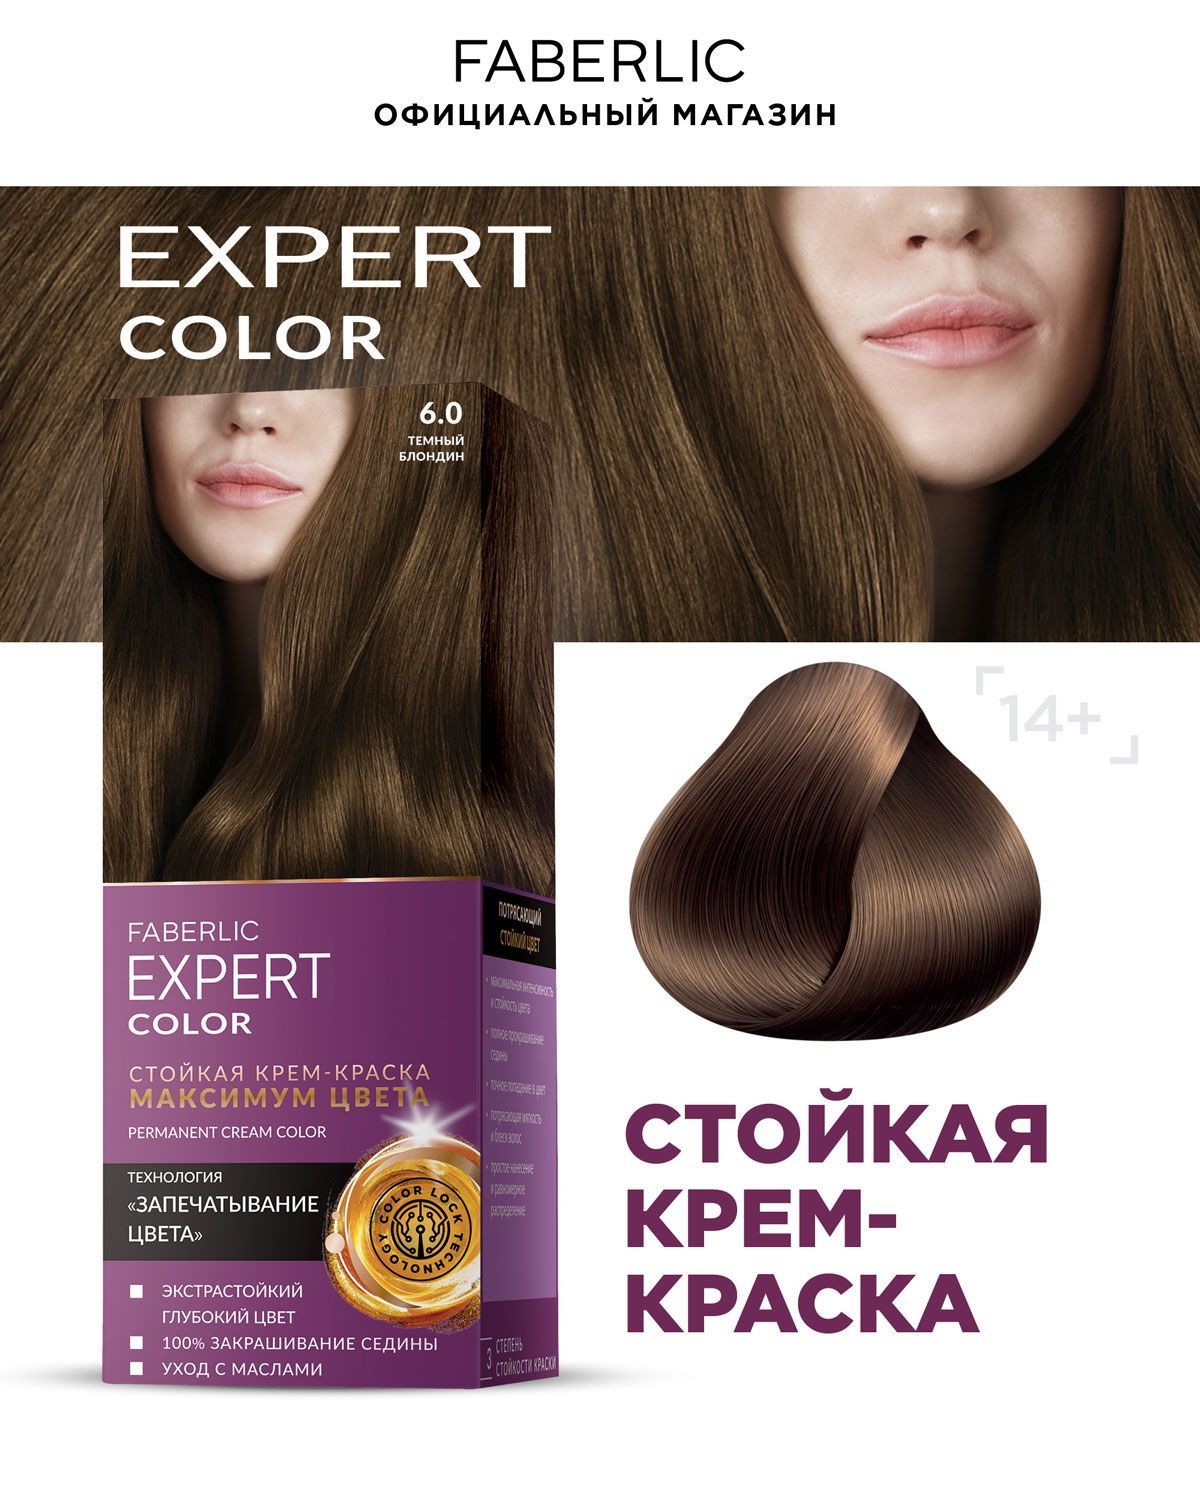 Краска эксперт фаберлик отзывы. Фаберлик эксперт краска для волос. Краска для волос Expert Color Фаберлик 7.1. Краска эксперт Фаберлик 7.1.